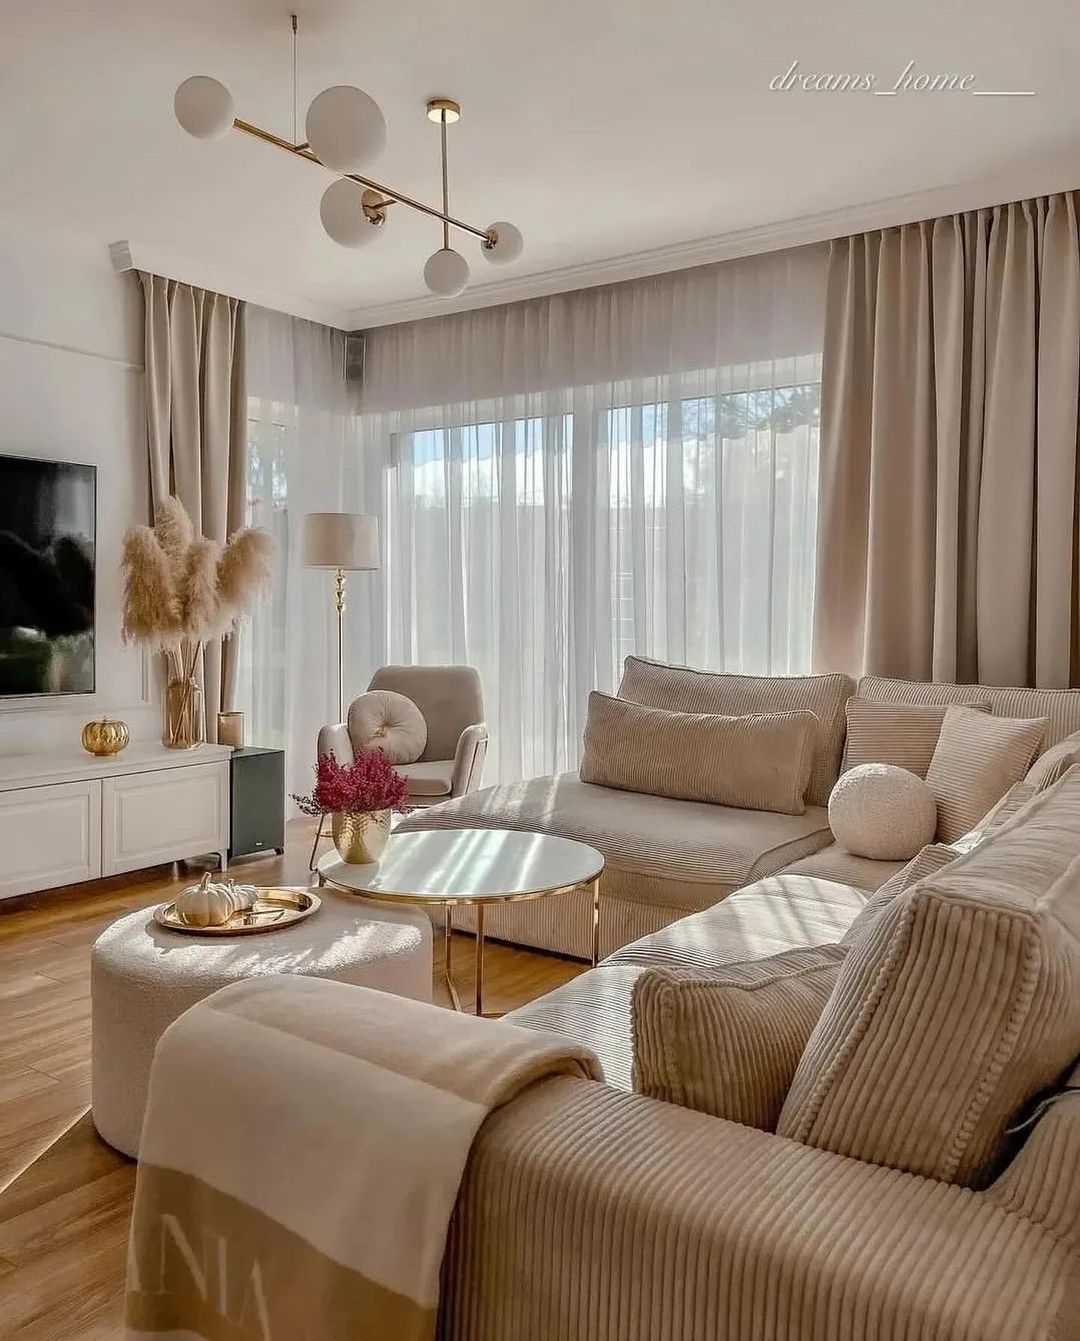 10 modern interior home design ideas